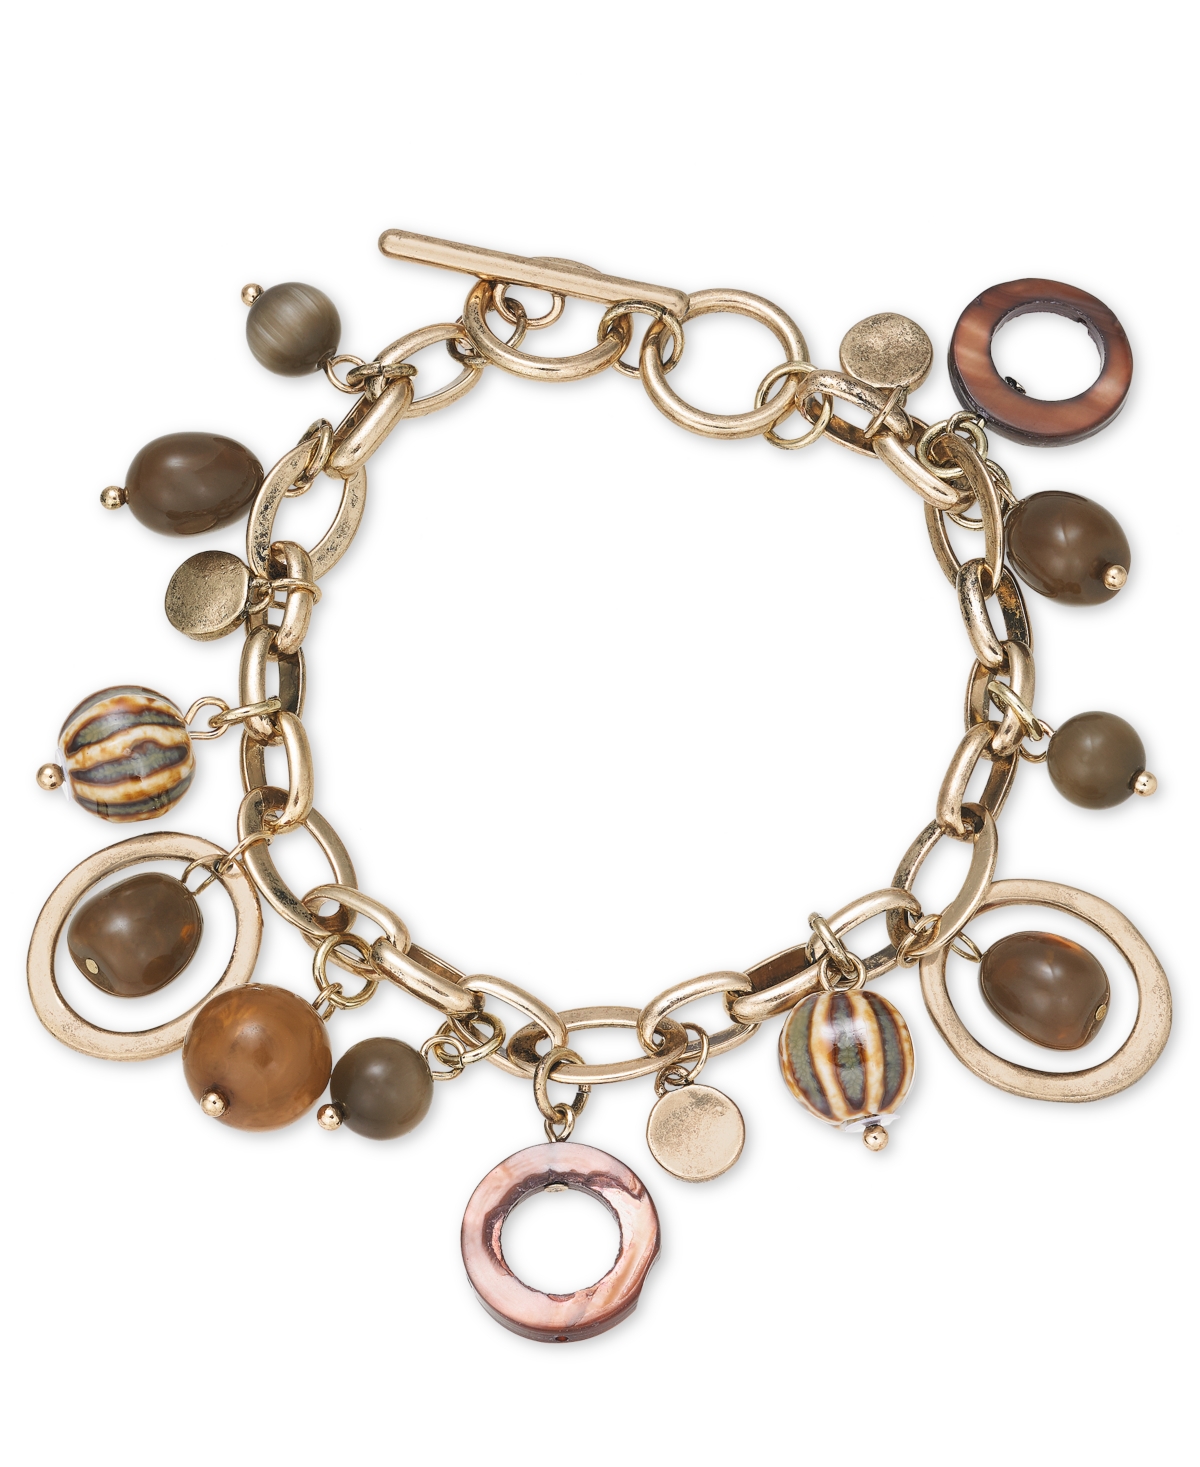 Gold-Tone Mixed Stone Charm Bracelet, Created for Macy's - Multi